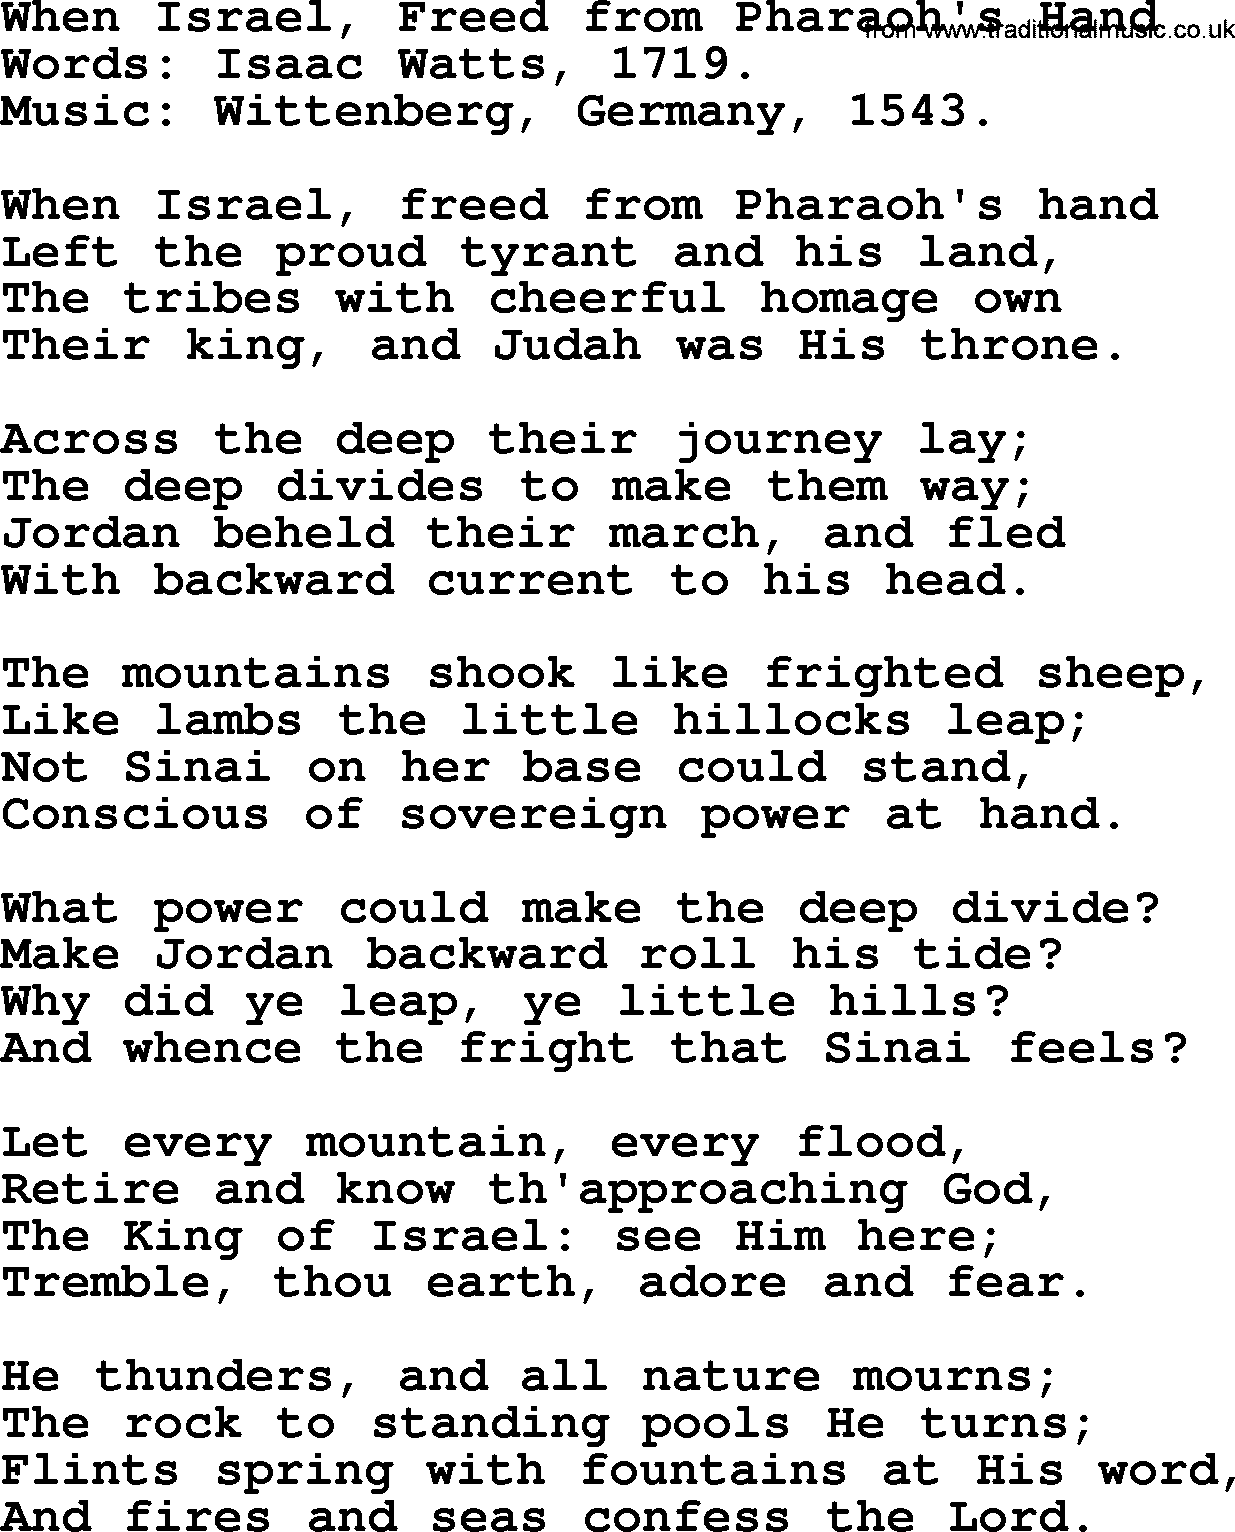 Isaac Watts Christian hymn: When Israel, Freed from Pharaoh's Hand- lyricss